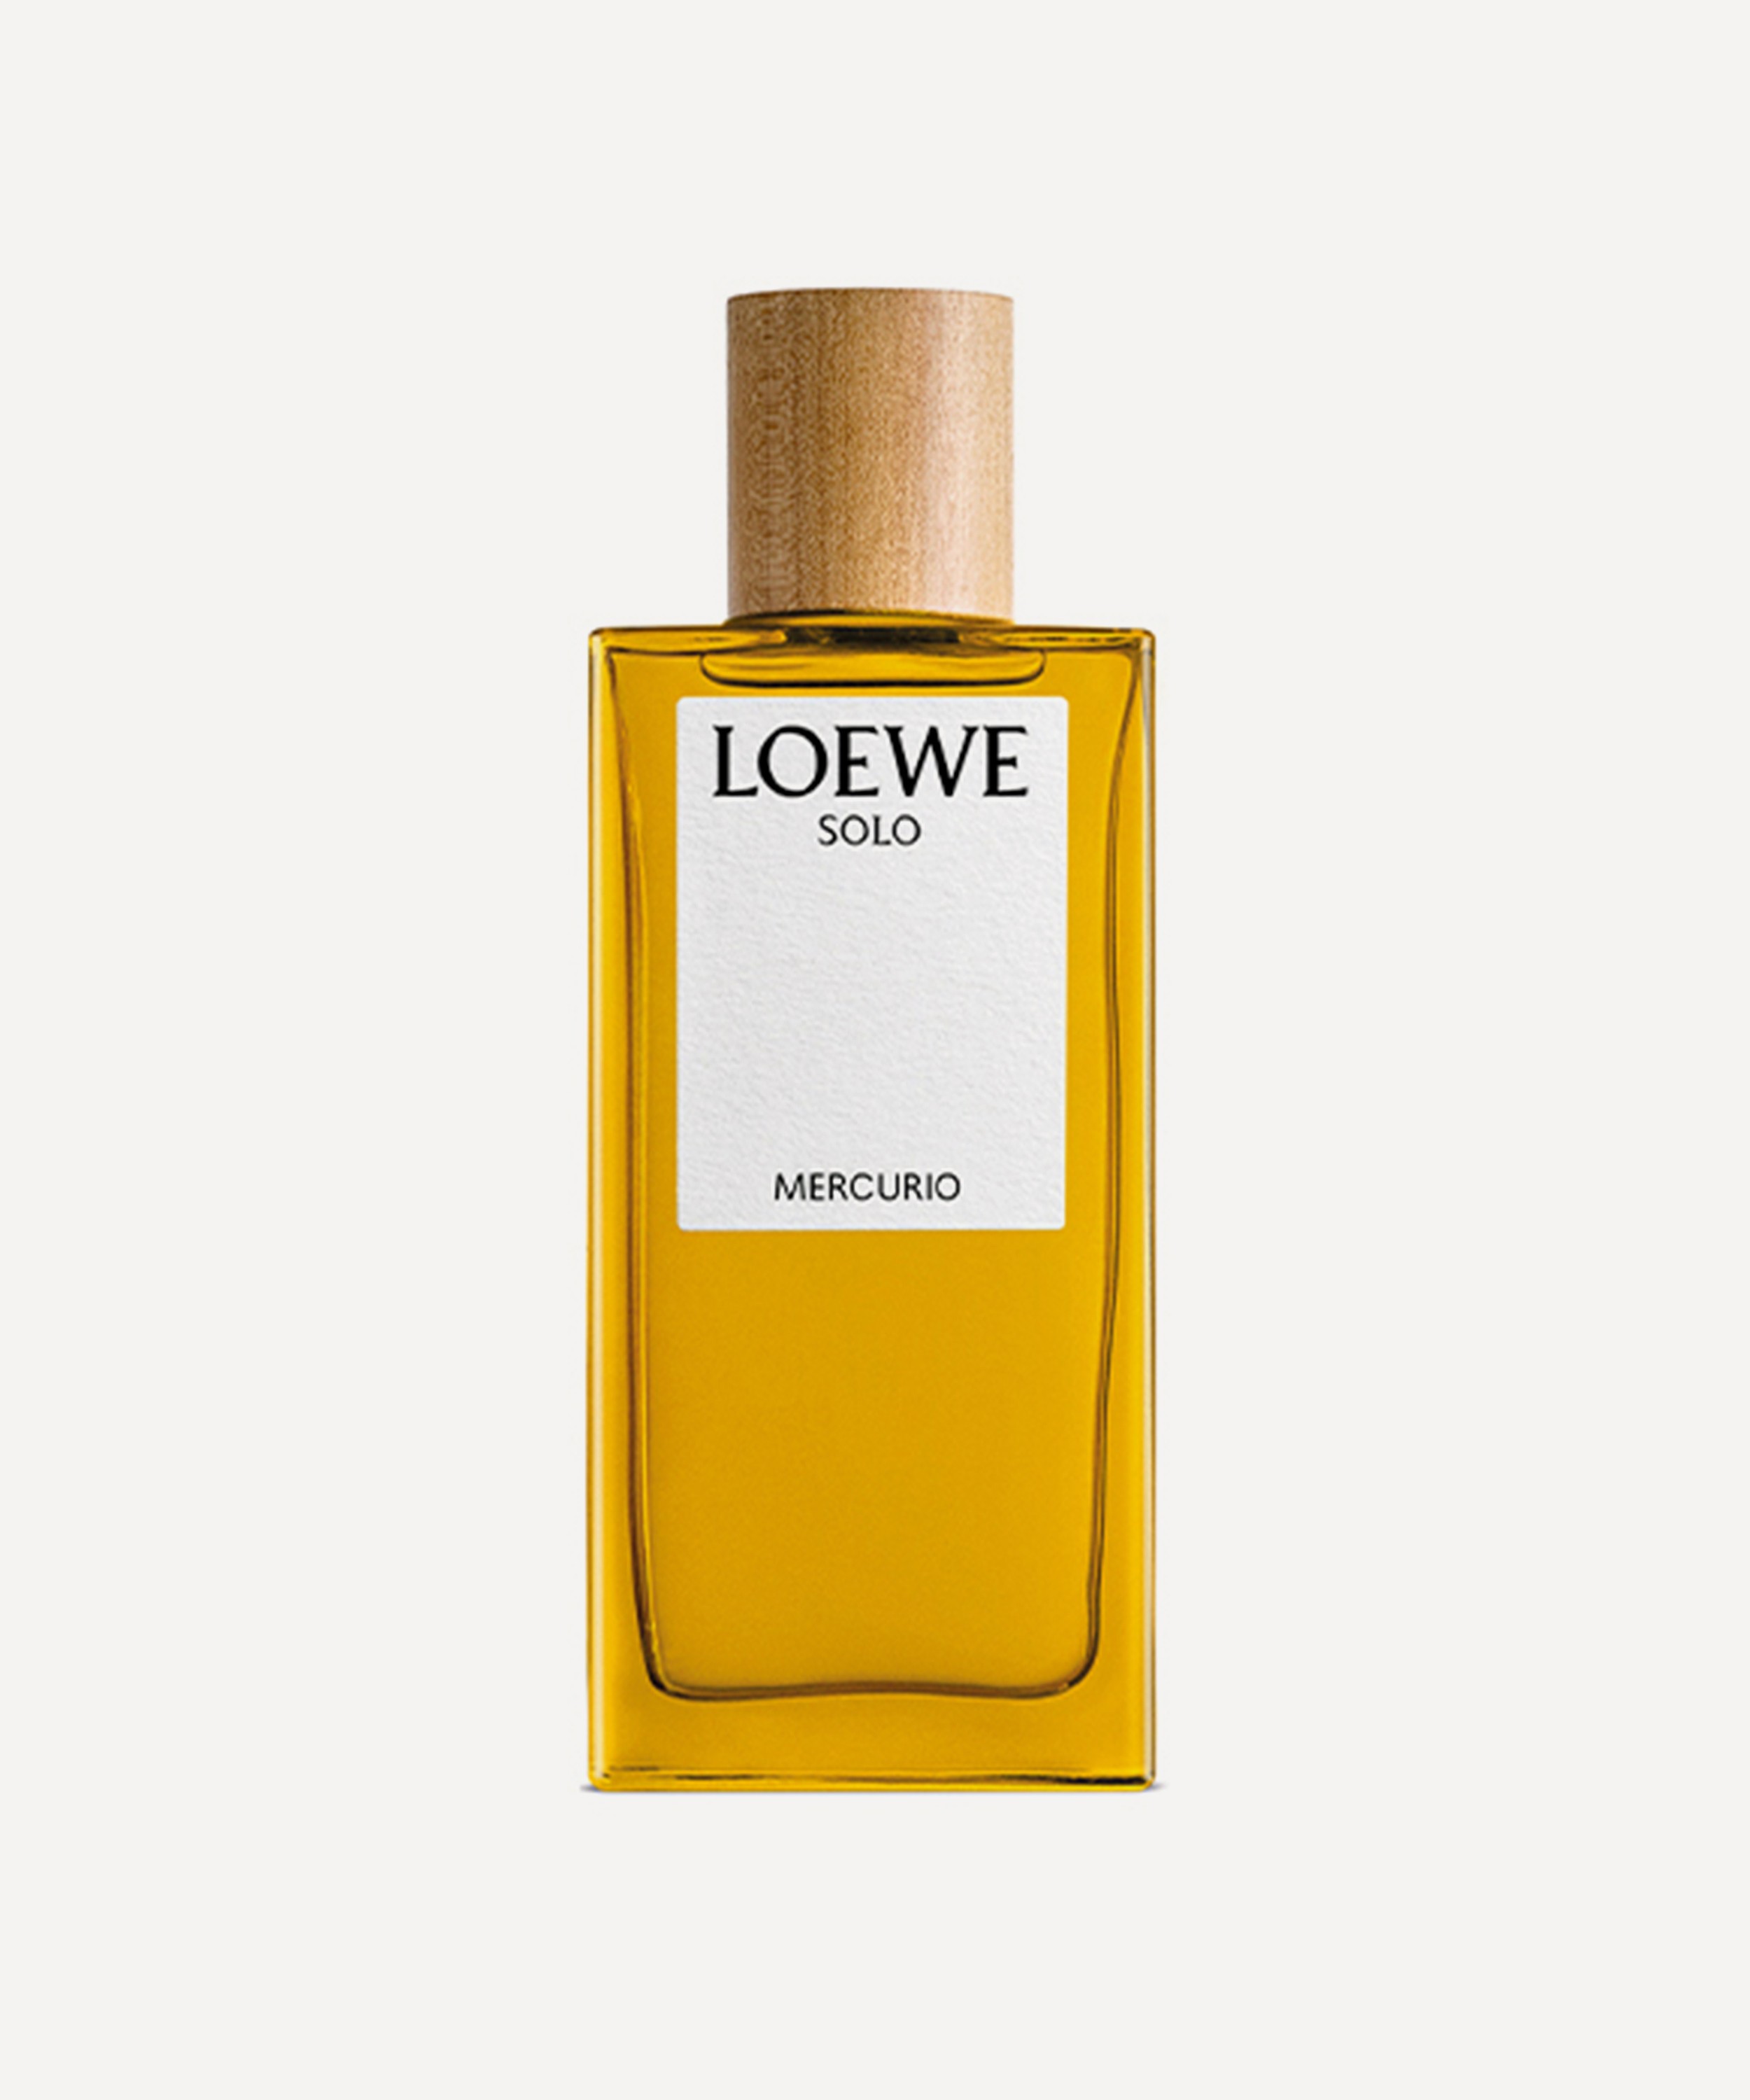 Loewe Women's Solo Mercurio Eau de Parfum 100ml